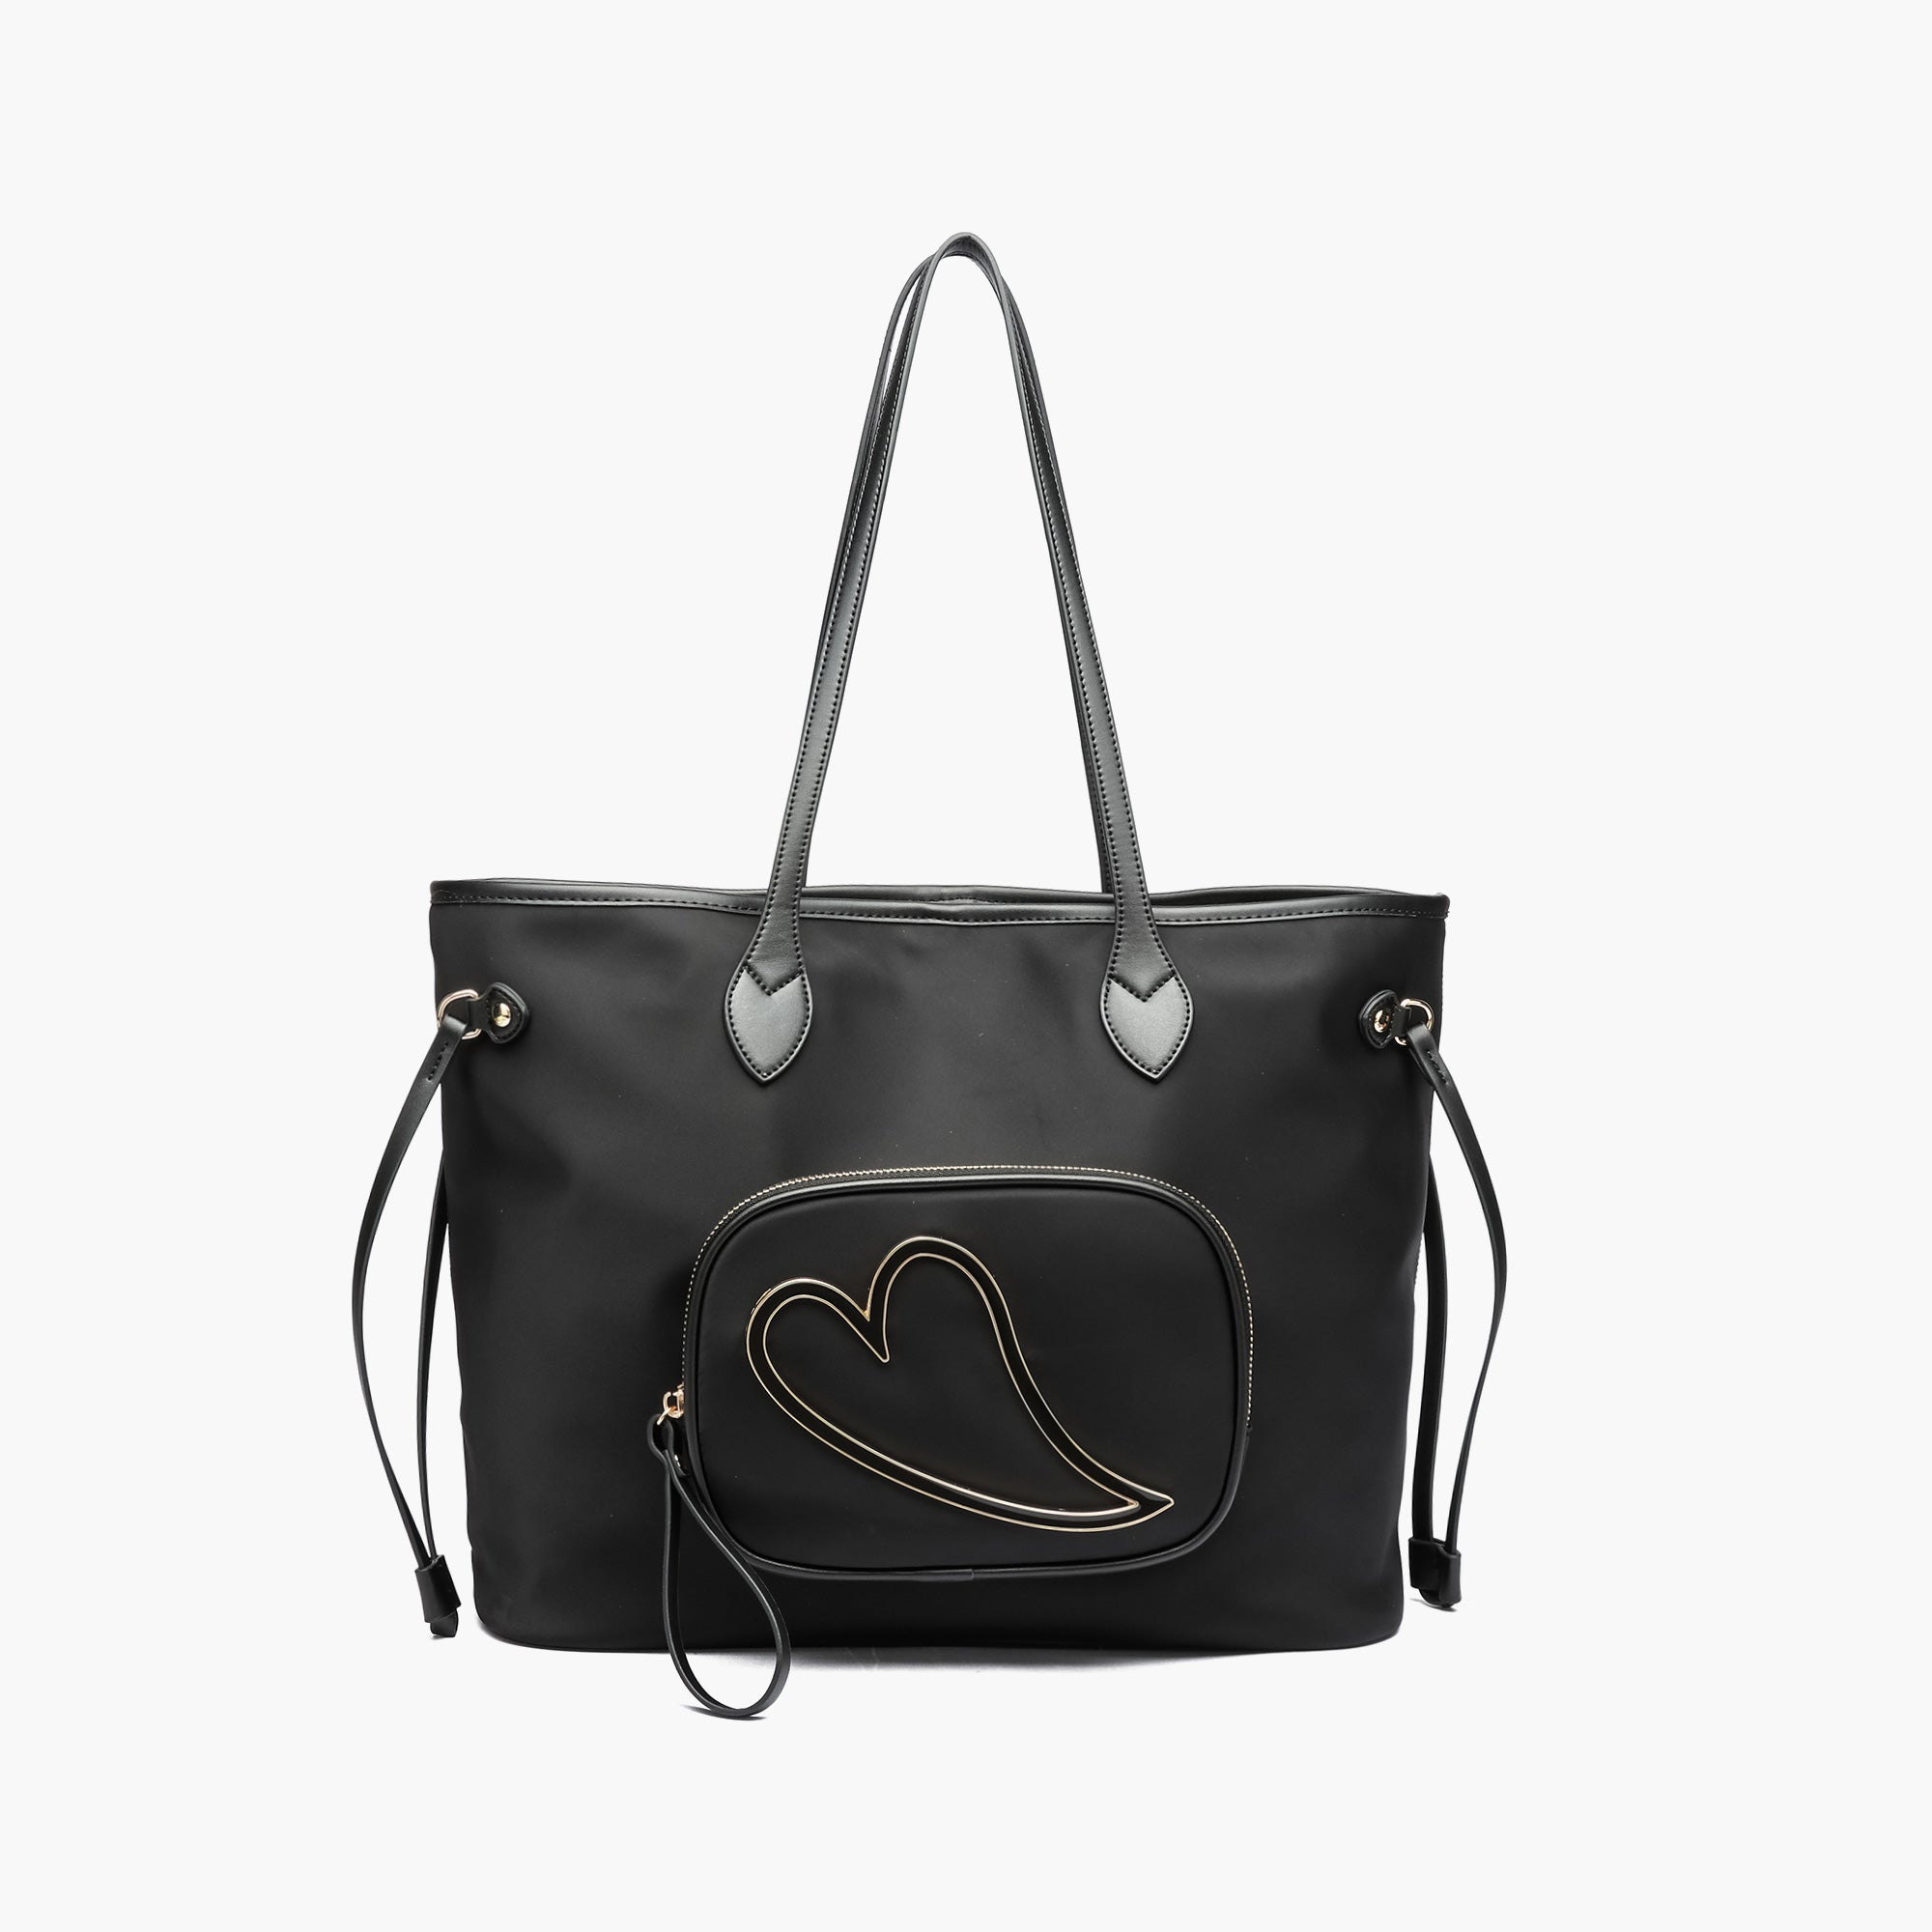 Heart Woven Cream & Dark Brown Leather Shoulder Bag Handbag